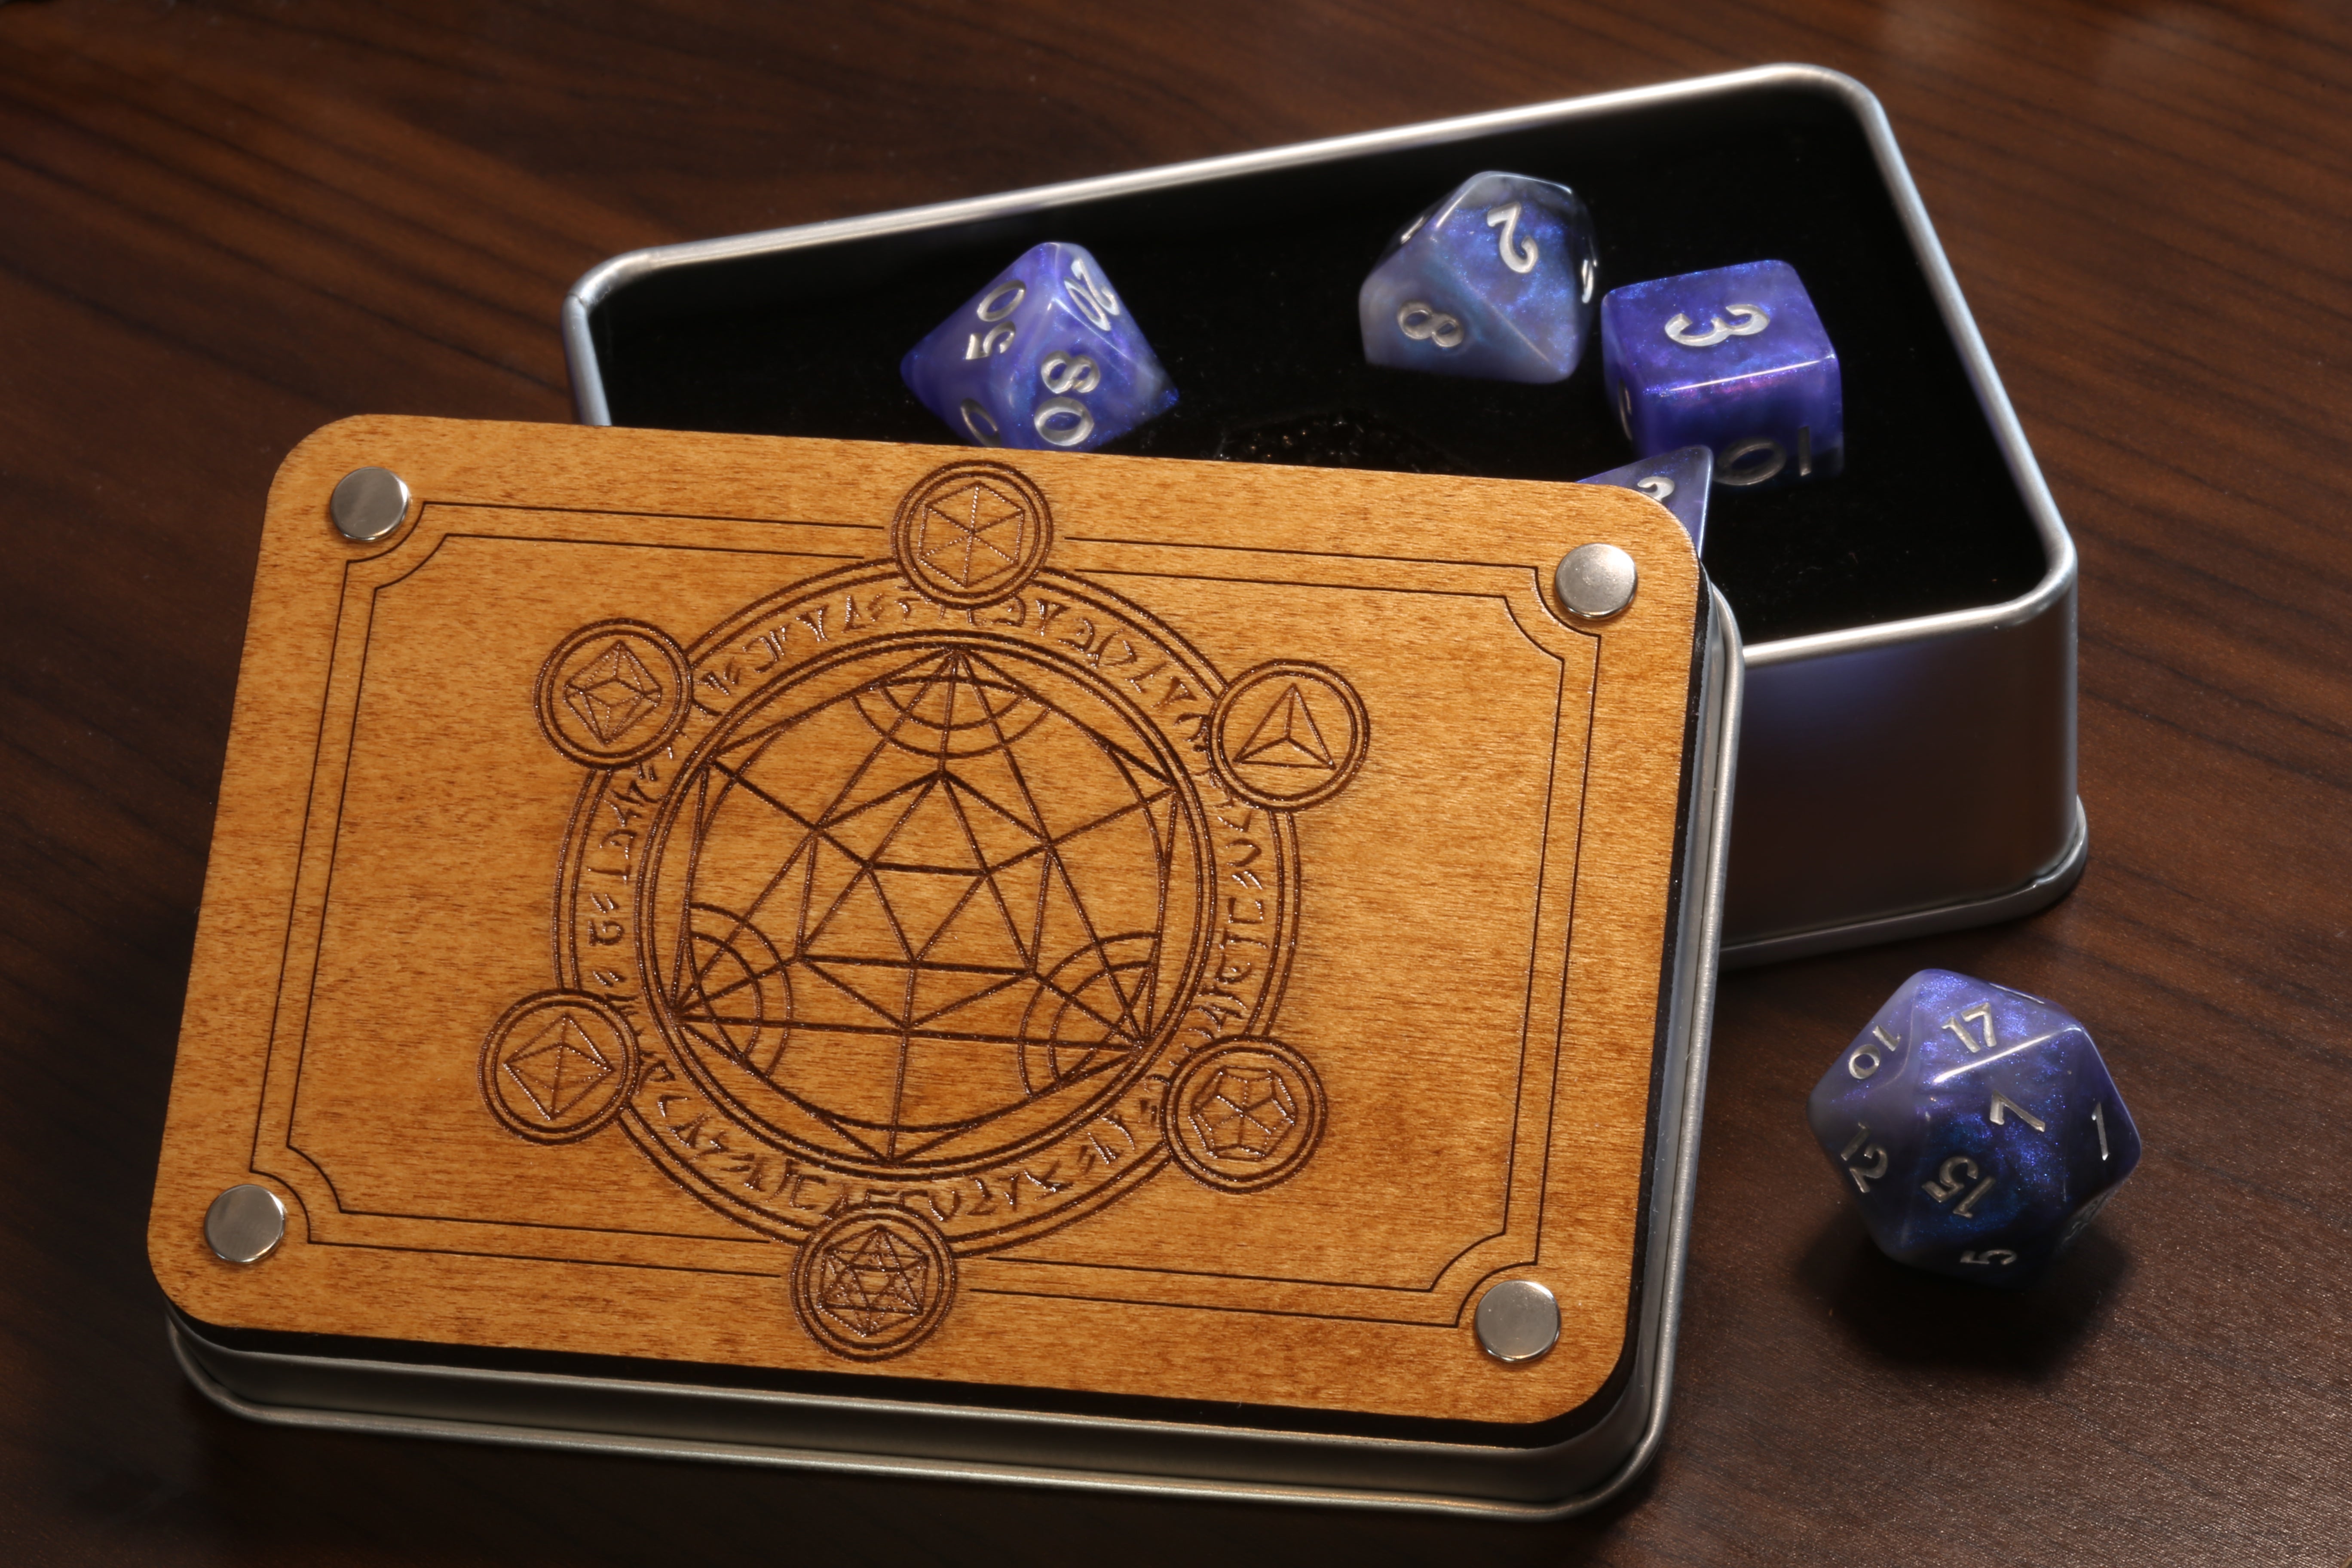 Polyhedral Magic Circle box and dice set - The Wizard's Vault